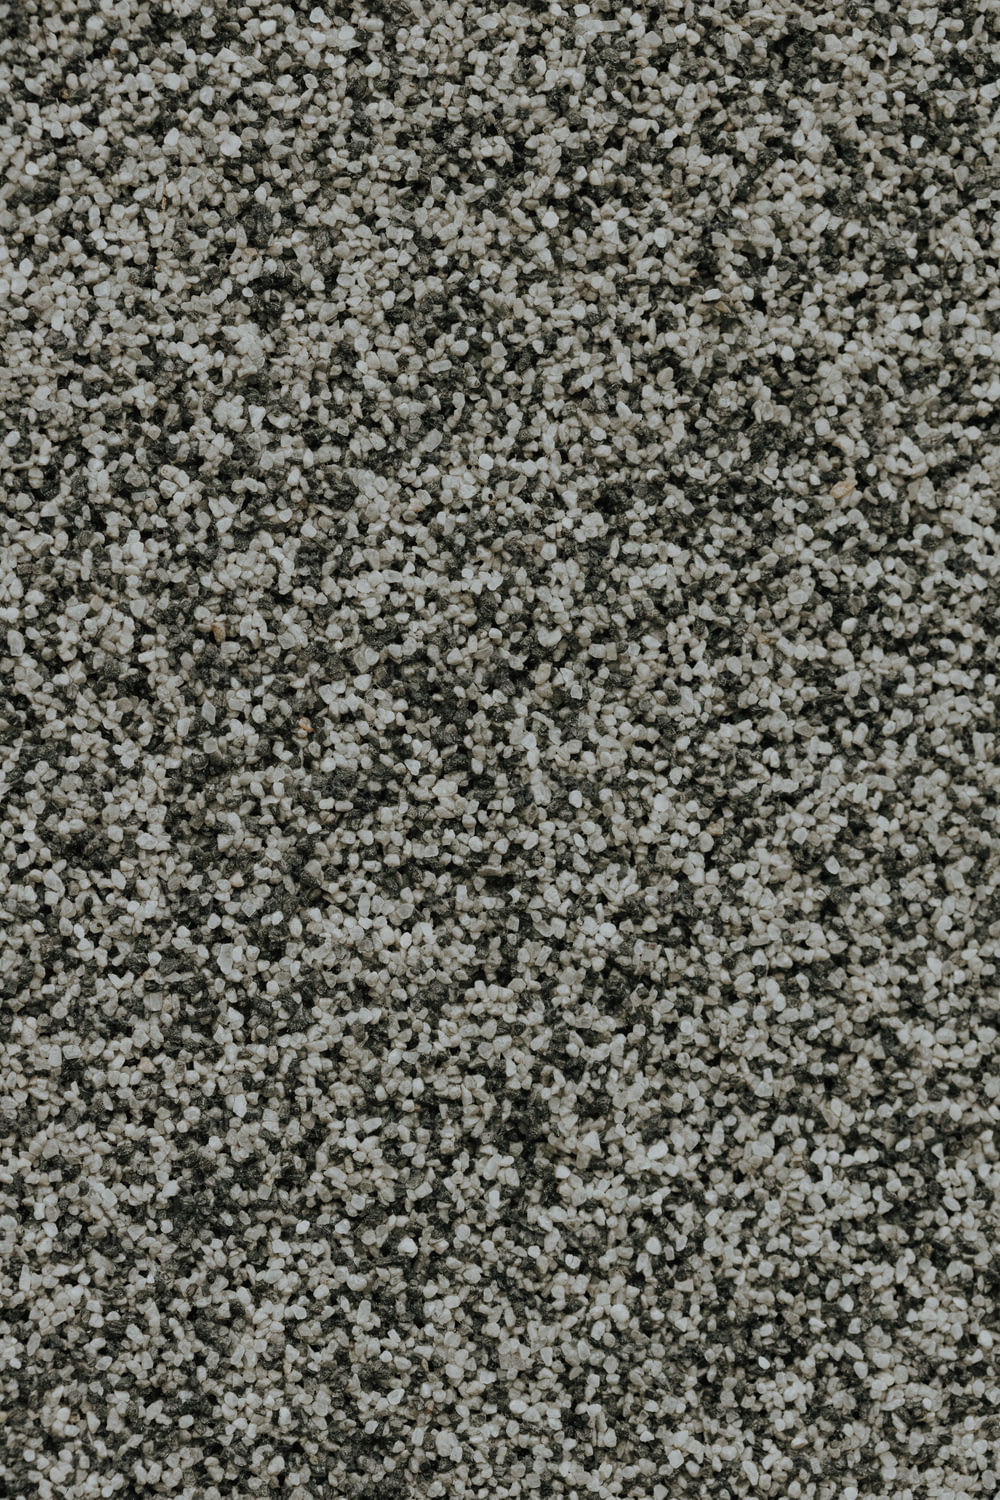 a close up of a gray carpet texture